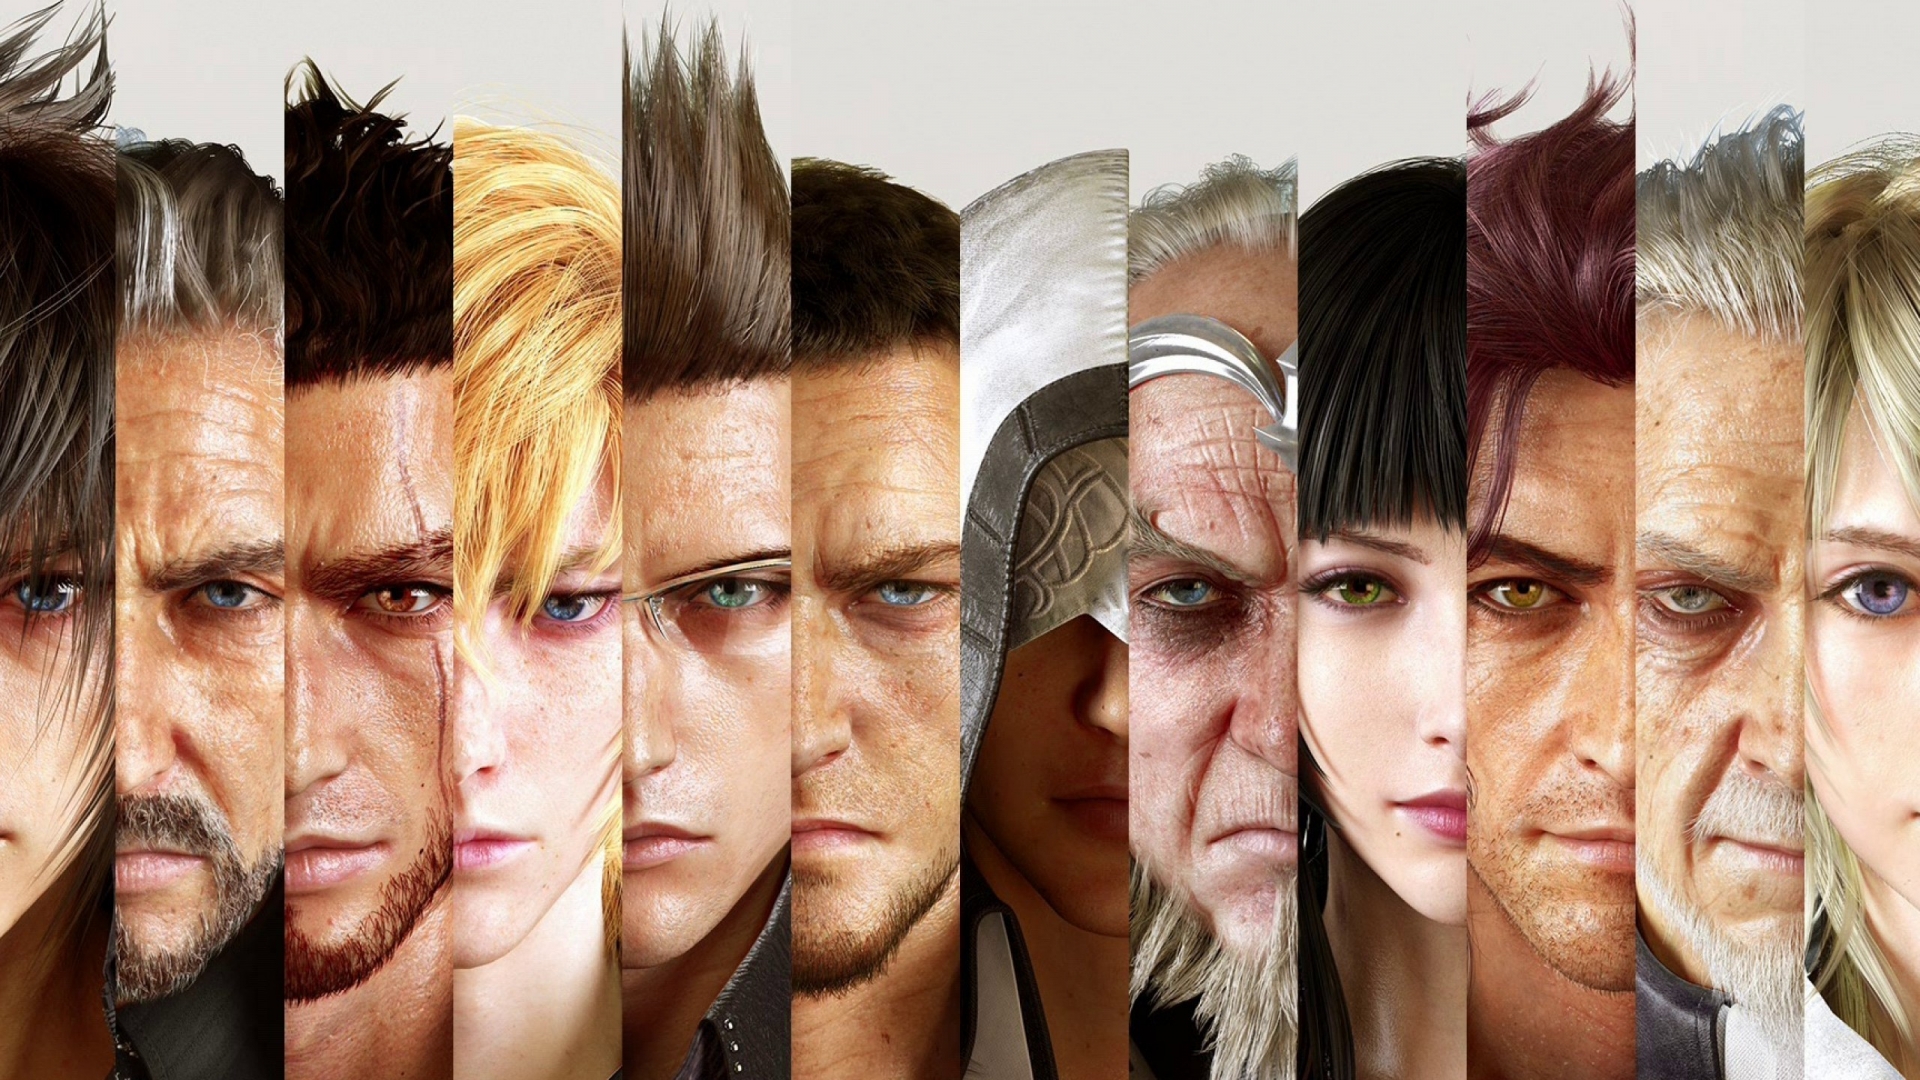 Final Fantasy XV Cast for 1920 x 1080 HDTV 1080p resolution